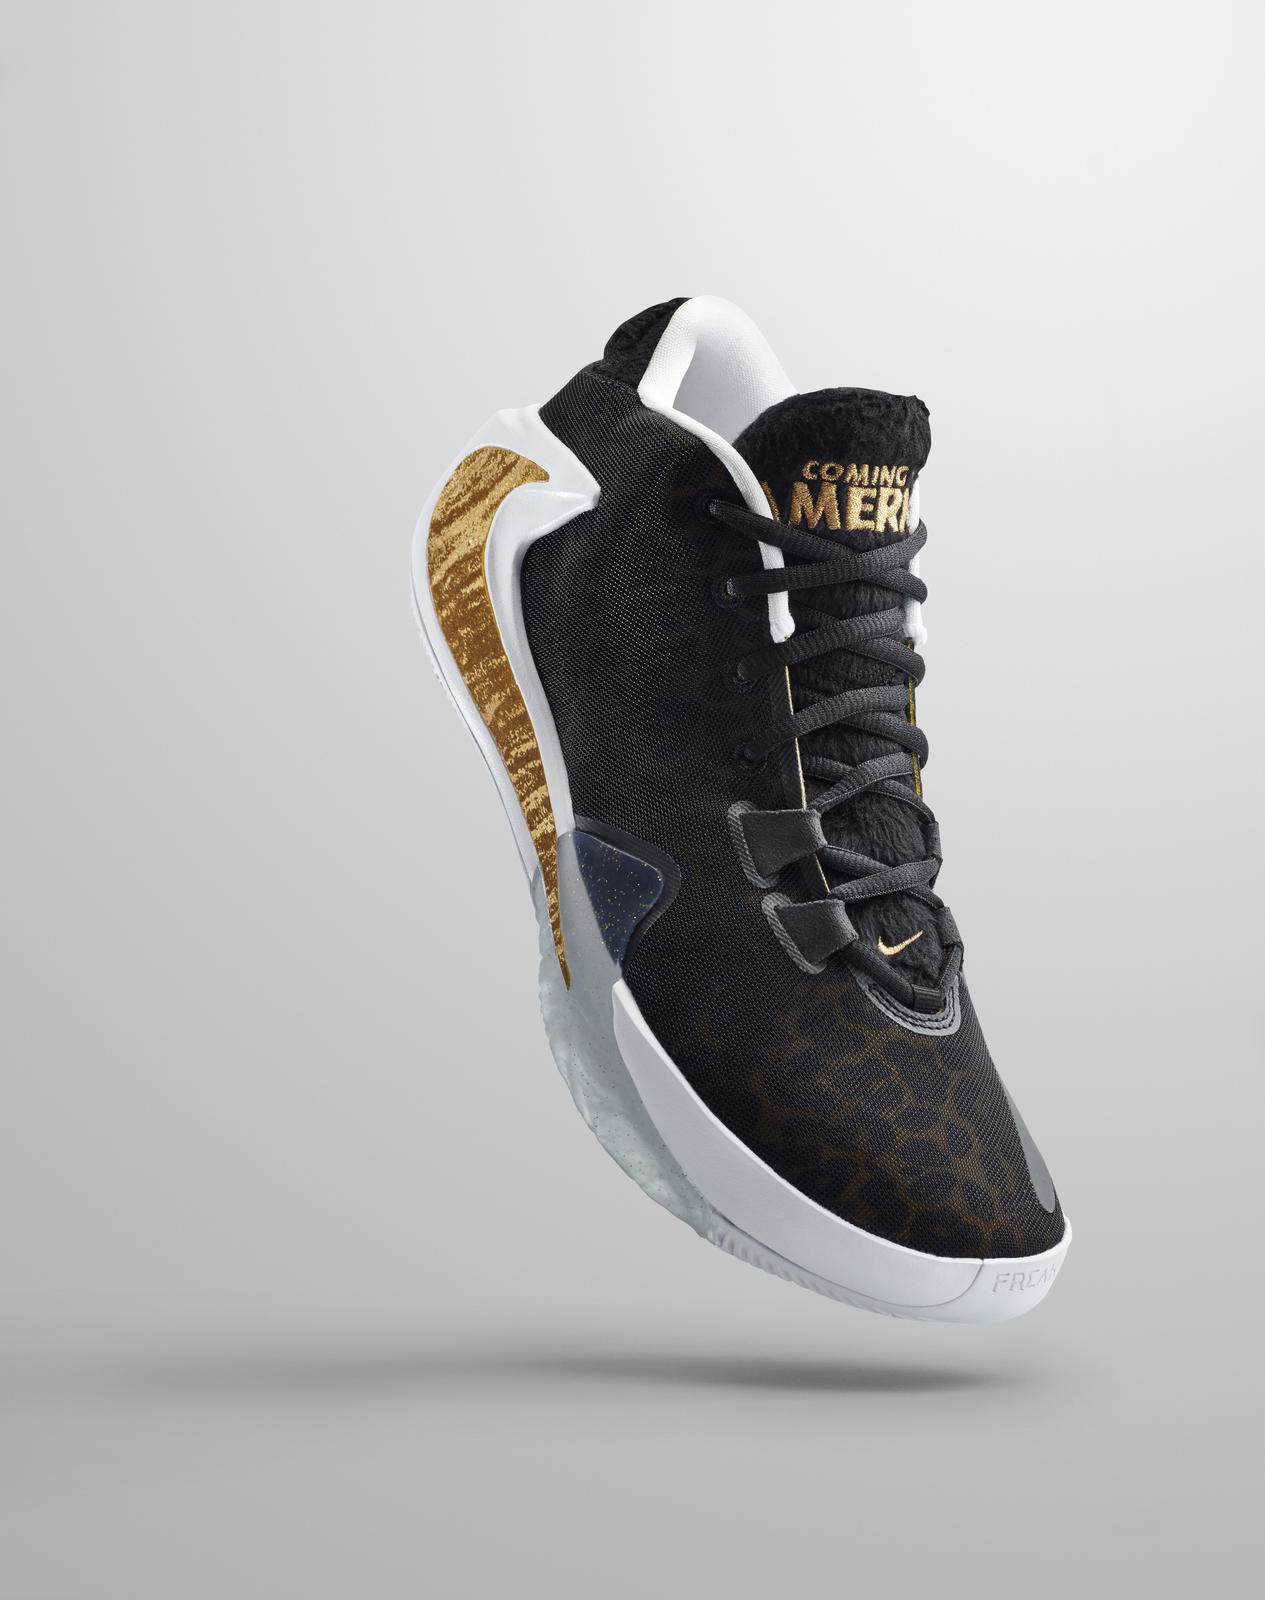 Zapatillas Nike Giannis Antetokounmpo 'Coming to America' 2019|  zapatillasysneakers.com